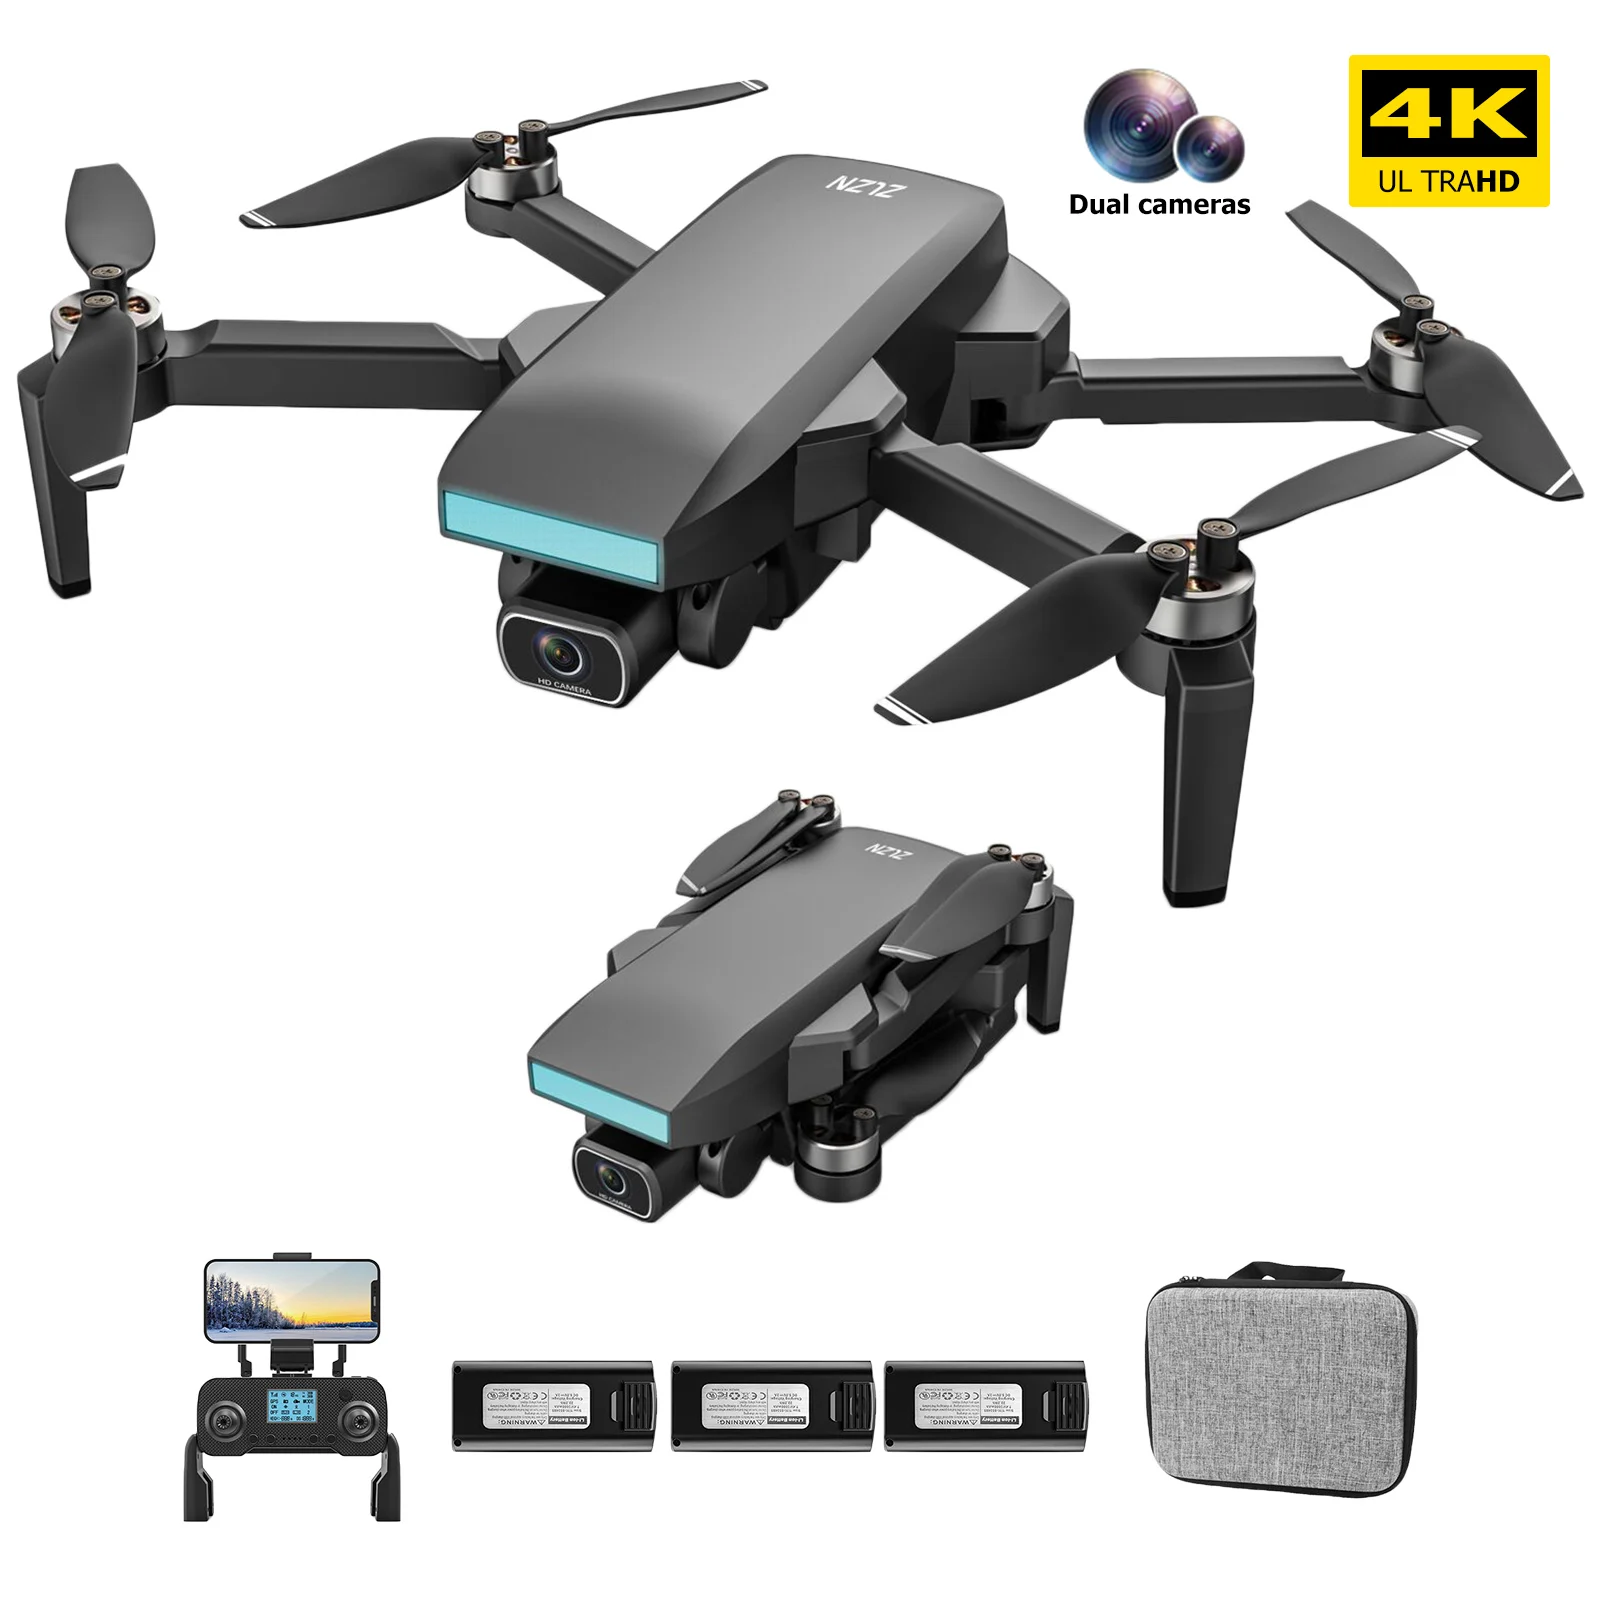 

Mini Dron RC Folding Quadcopter SG107 PRO Drone 4K Professional ESC Camera GPS Optical Flow 5G WIFI Foldable RC Quadcopter